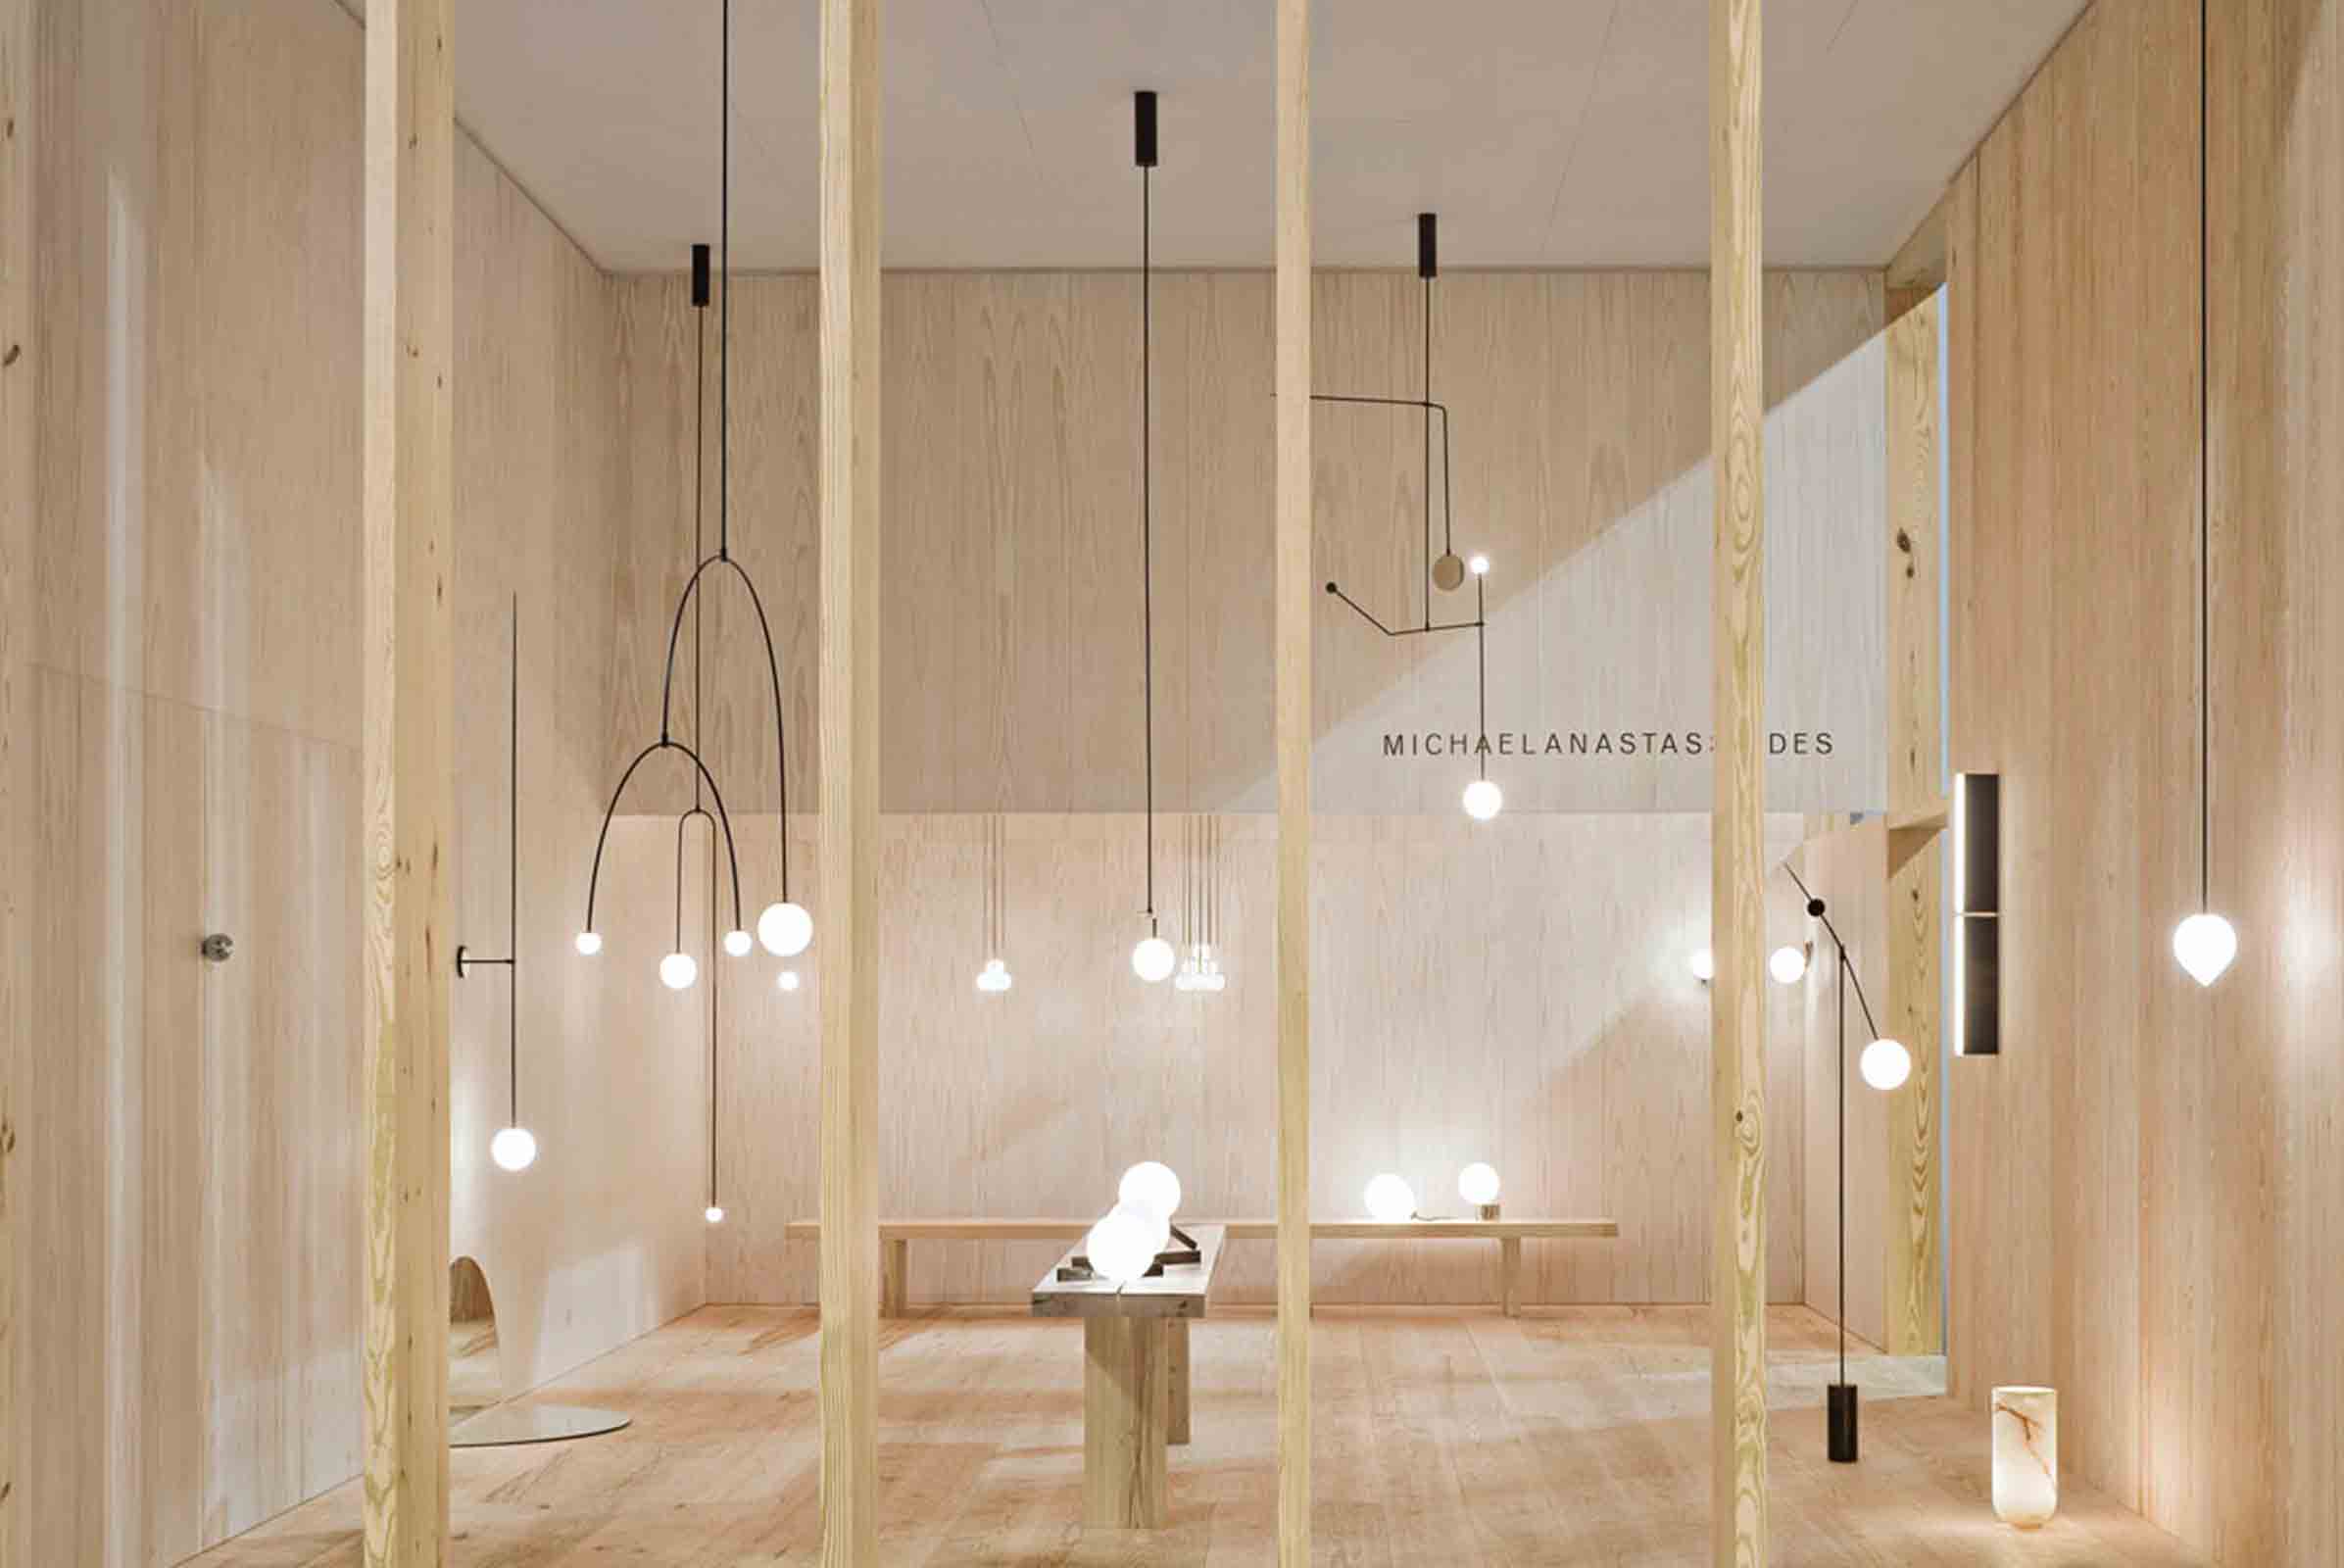 We loved the elegant minimalist designs from Michael Anastassiades